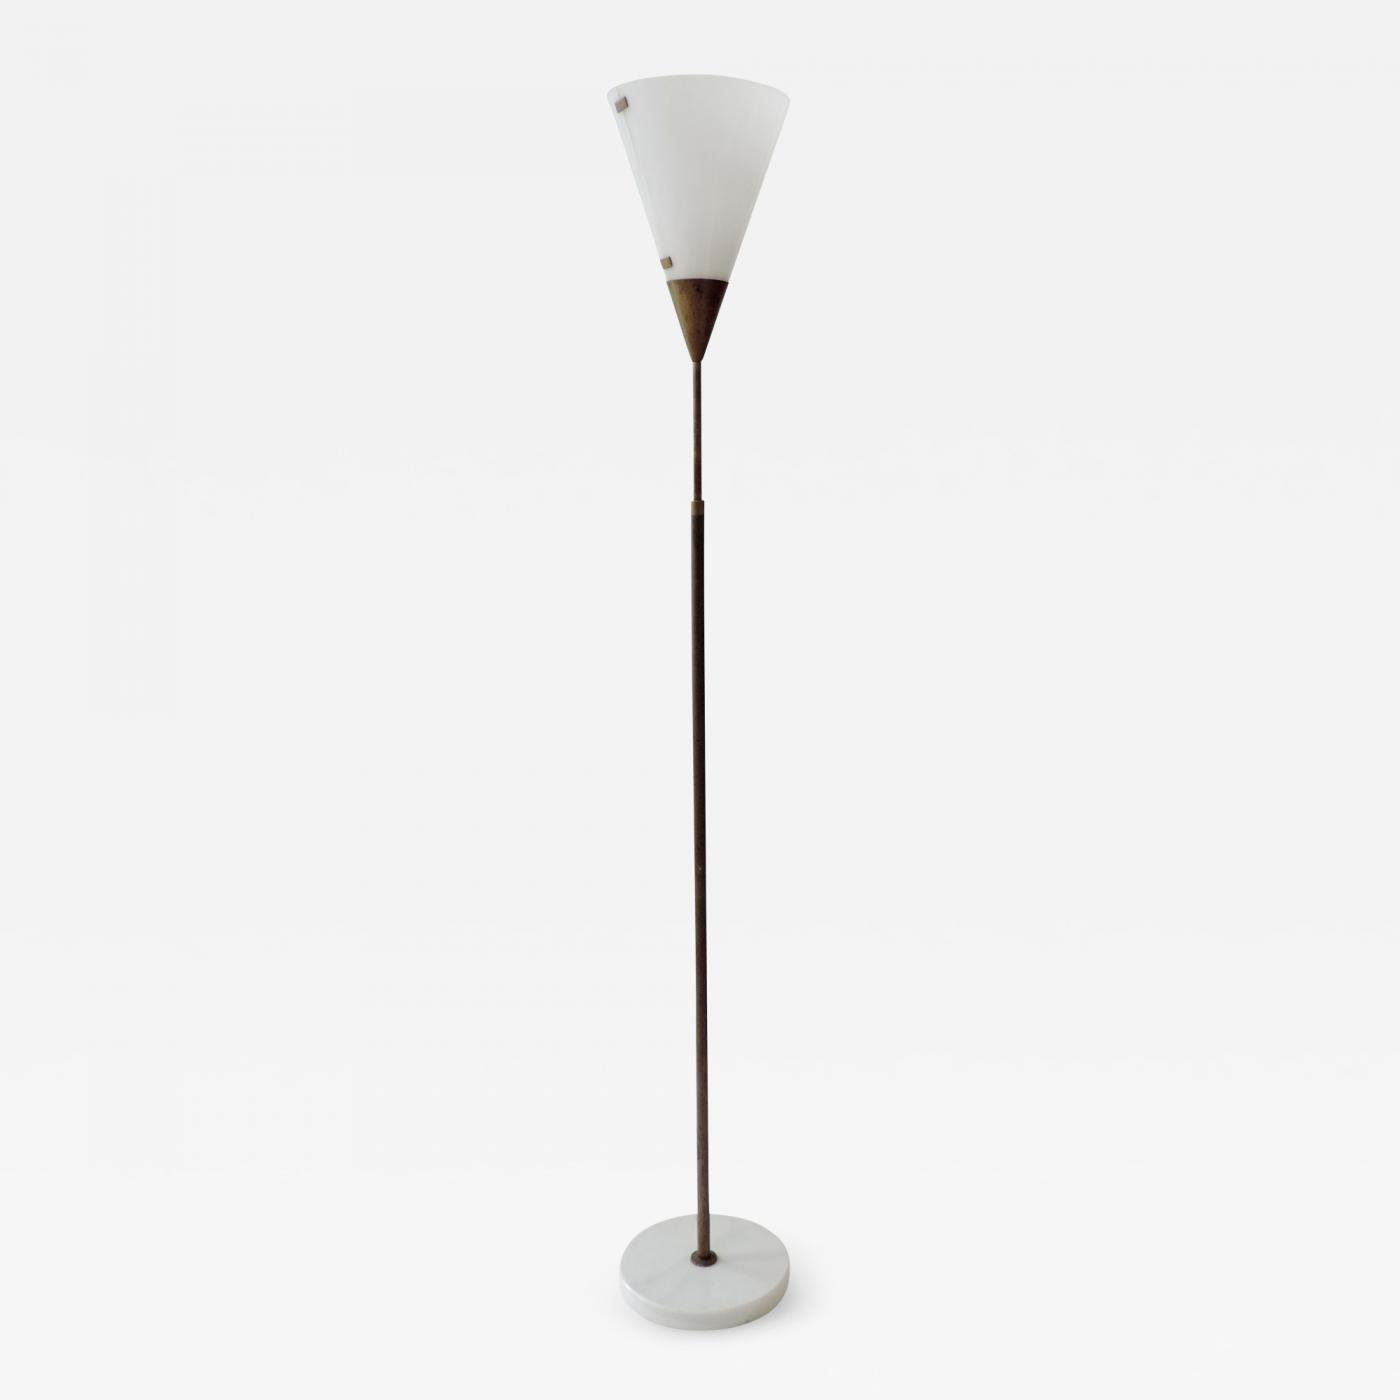 Giuseppe Ostuni Giuseppe Ostuni Mod 339 Adjustable Floor Lamp For Oluce with regard to proportions 1400 X 1400